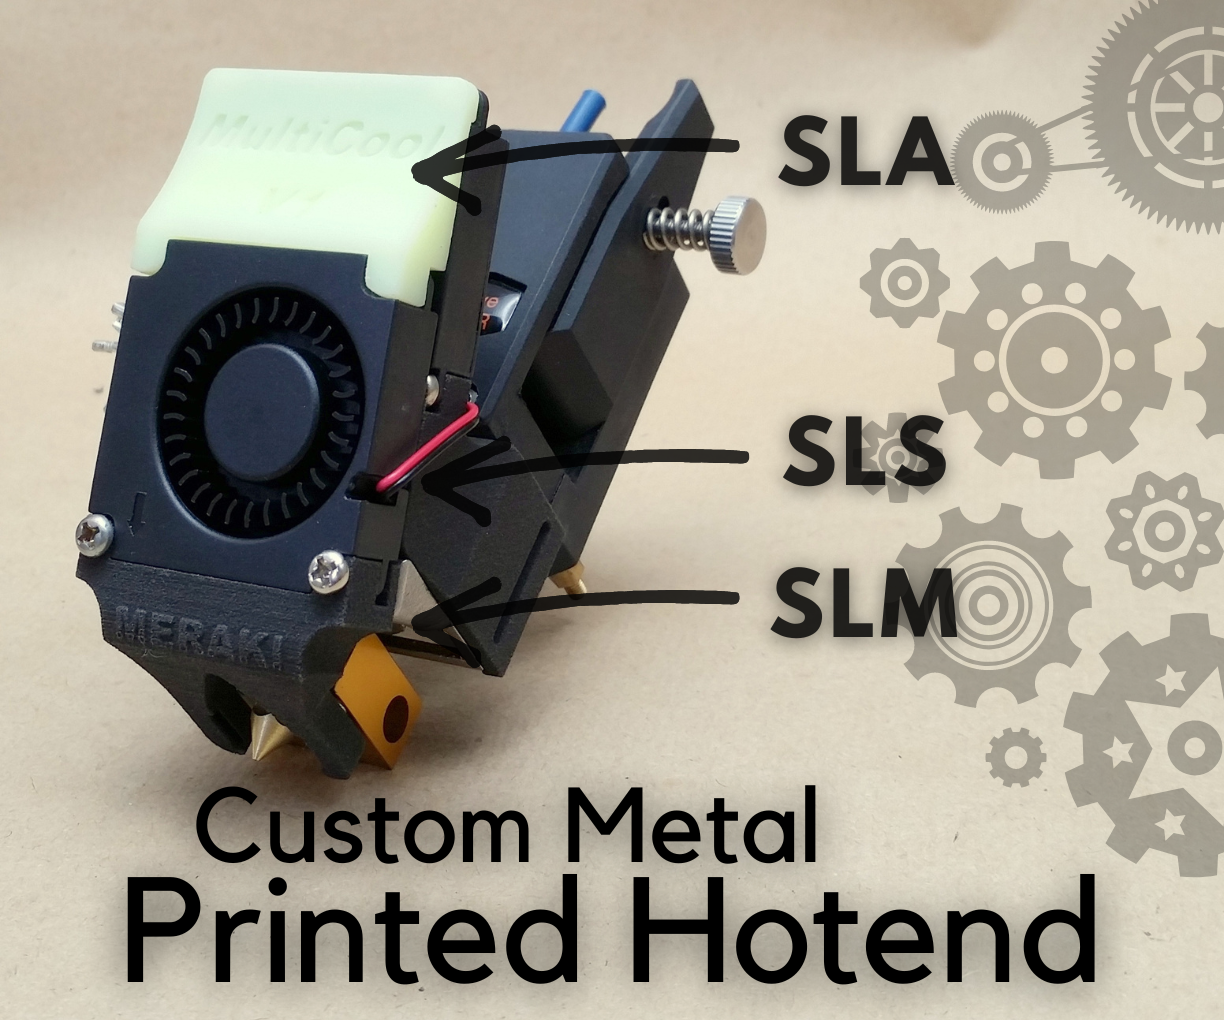 Custom Metal Printed Hotend!